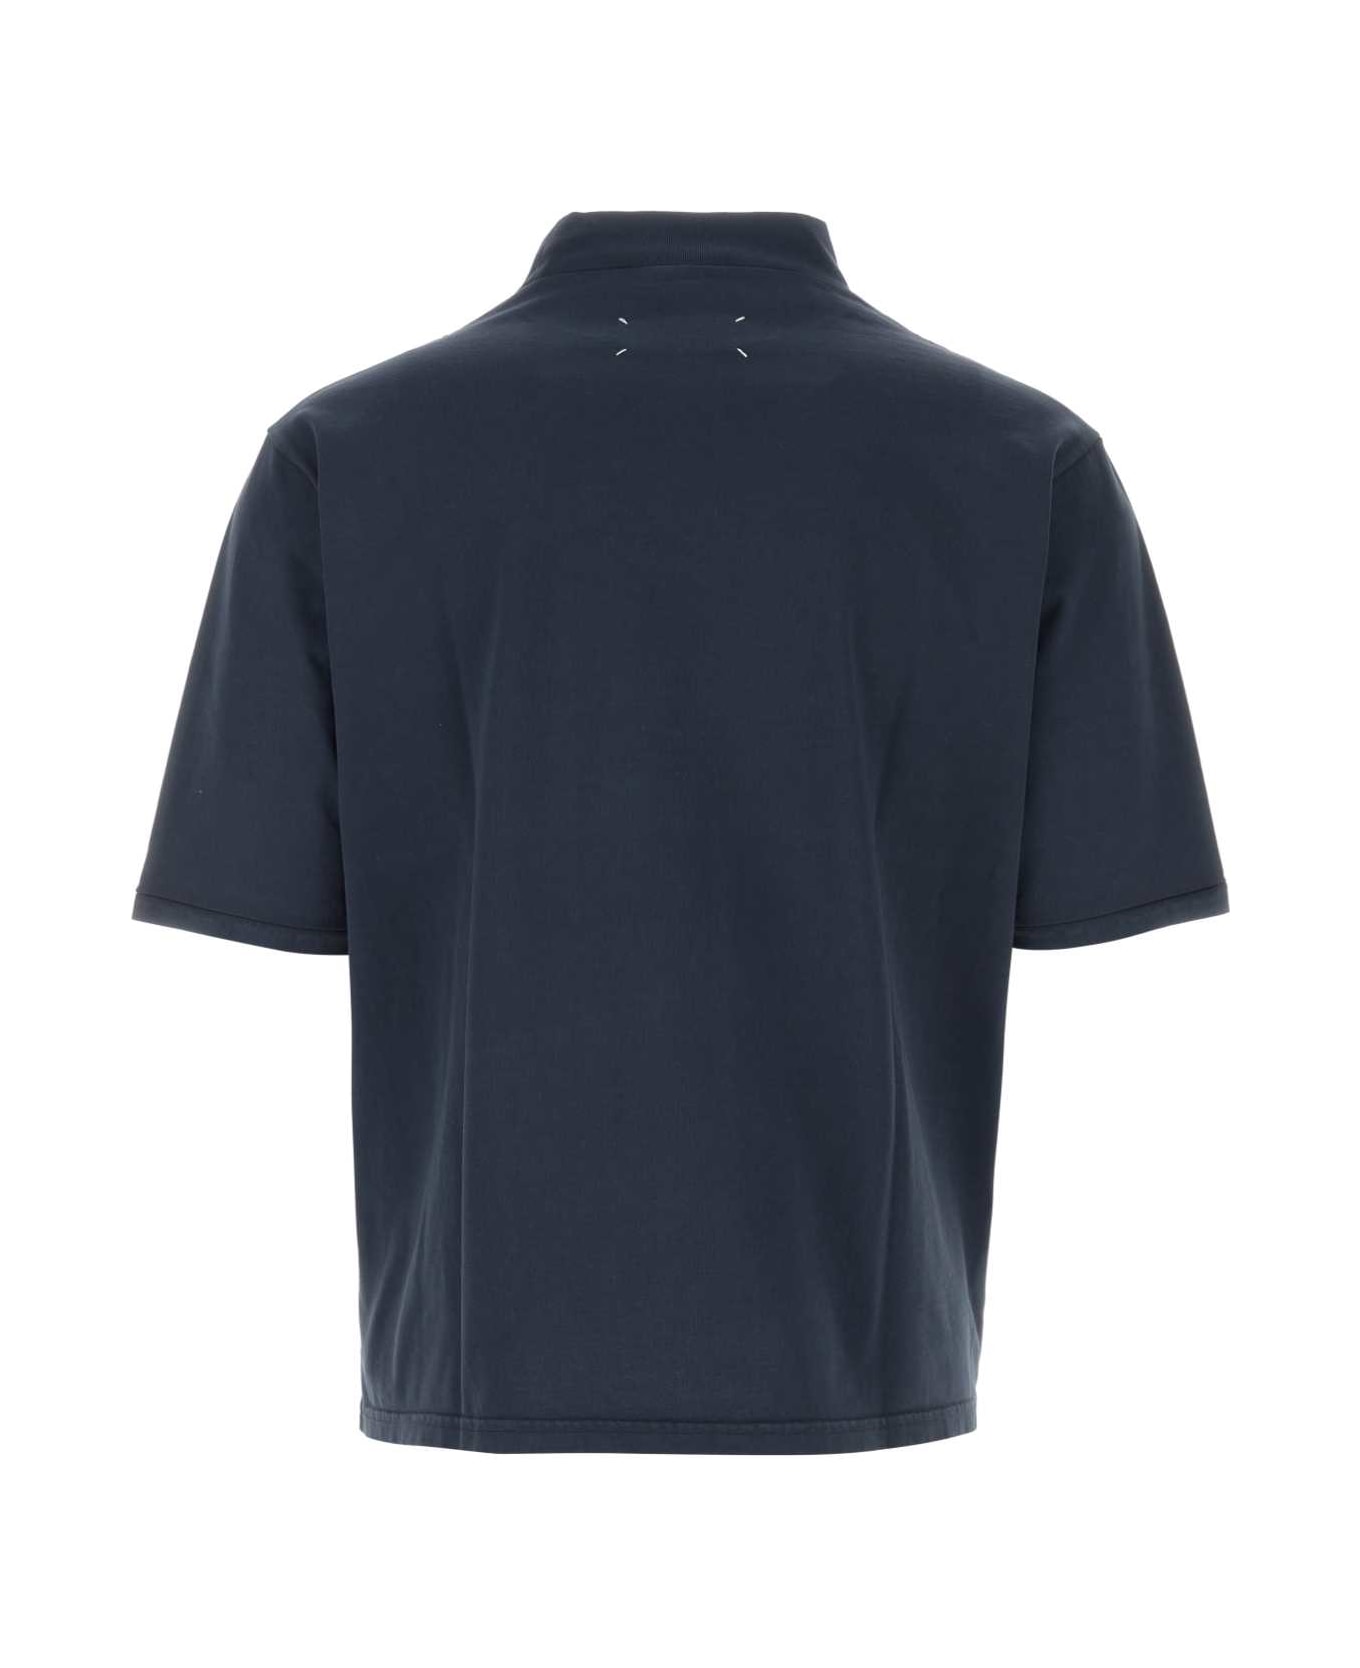 Maison Margiela Navy Blue Cotton T-shirt - NAVY シャツ